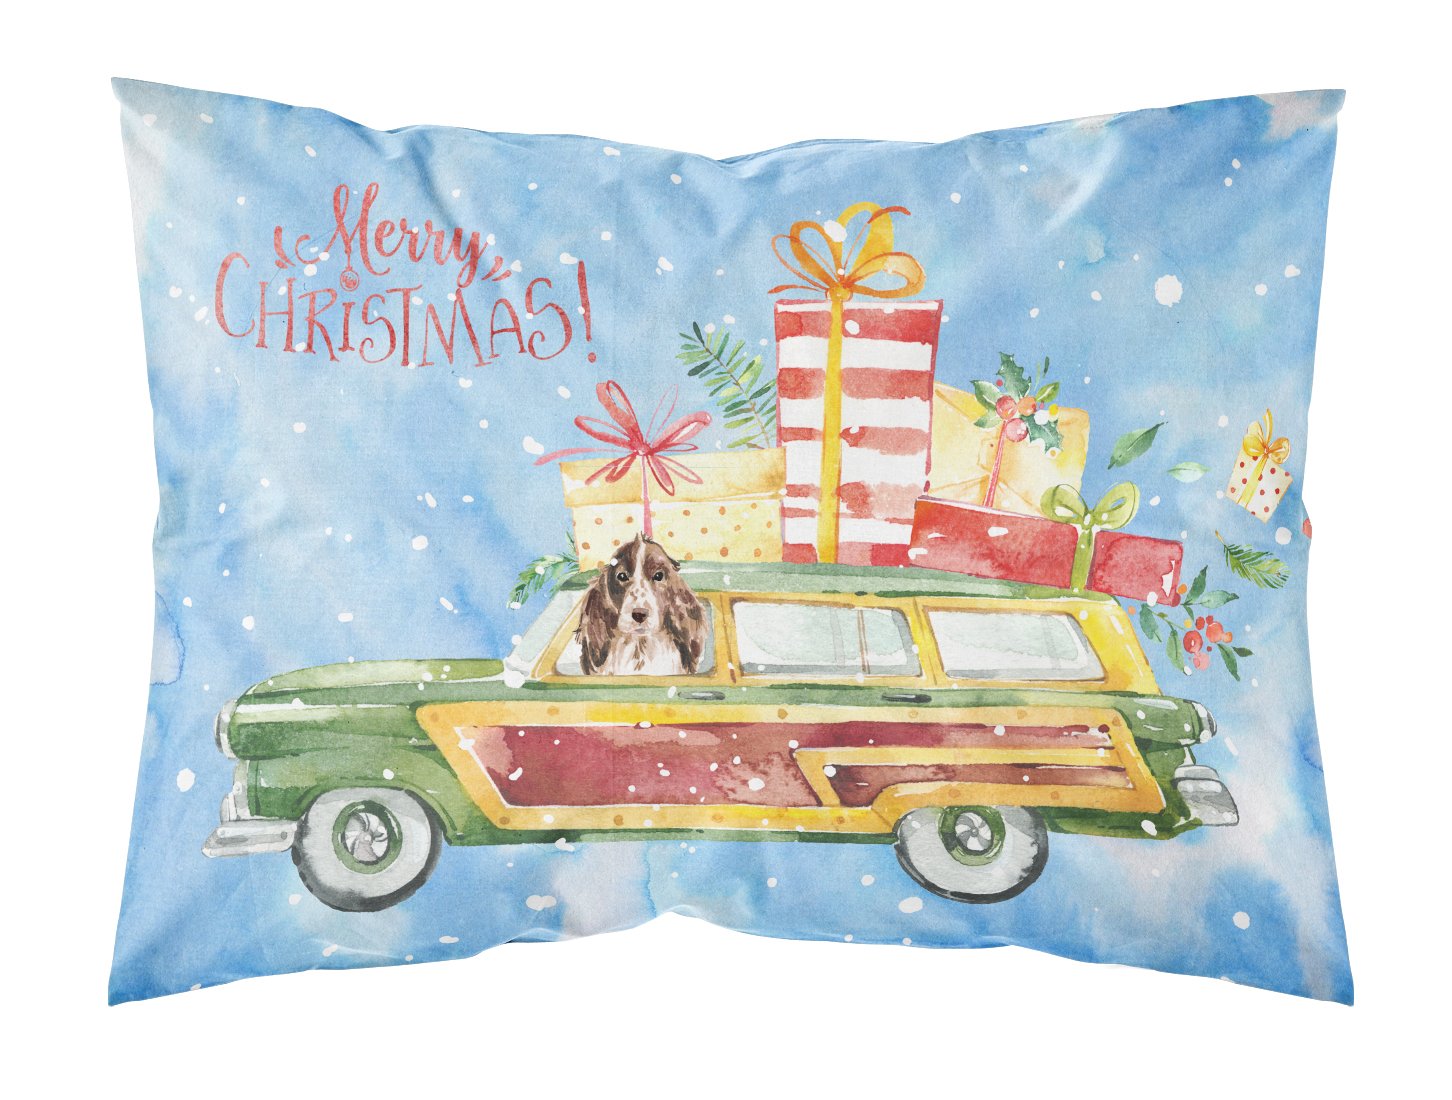 Merry Christmas Brown Parti Cocker Spaniel Fabric Standard Pillowcase CK2447PILLOWCASE by Caroline's Treasures